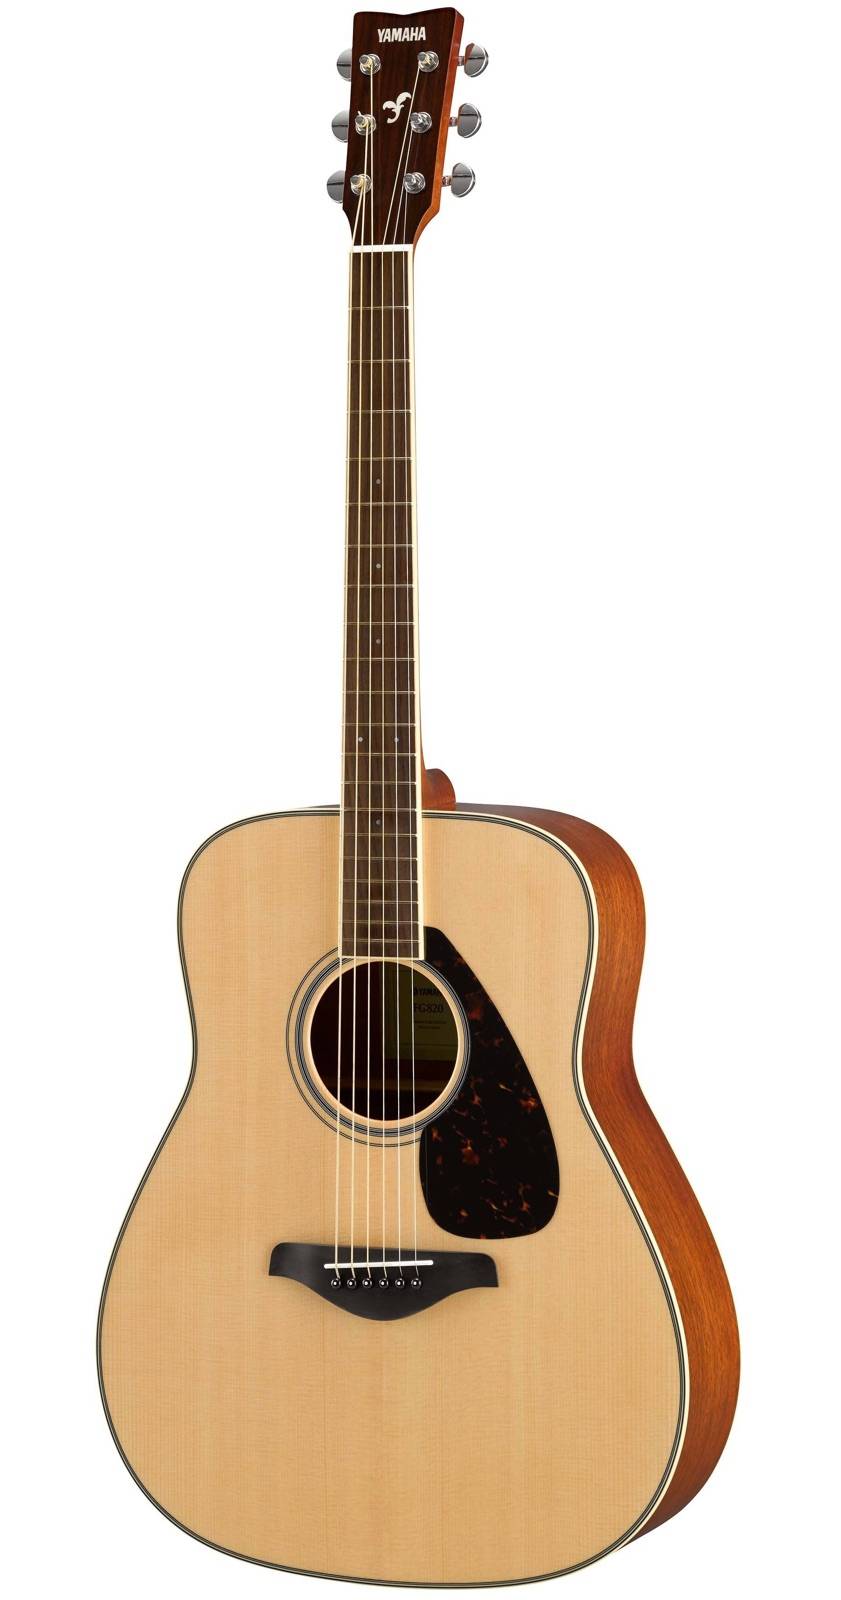 YAMAHA アコースティックギター FG820 ストラップ付 参考価格 37,000円 